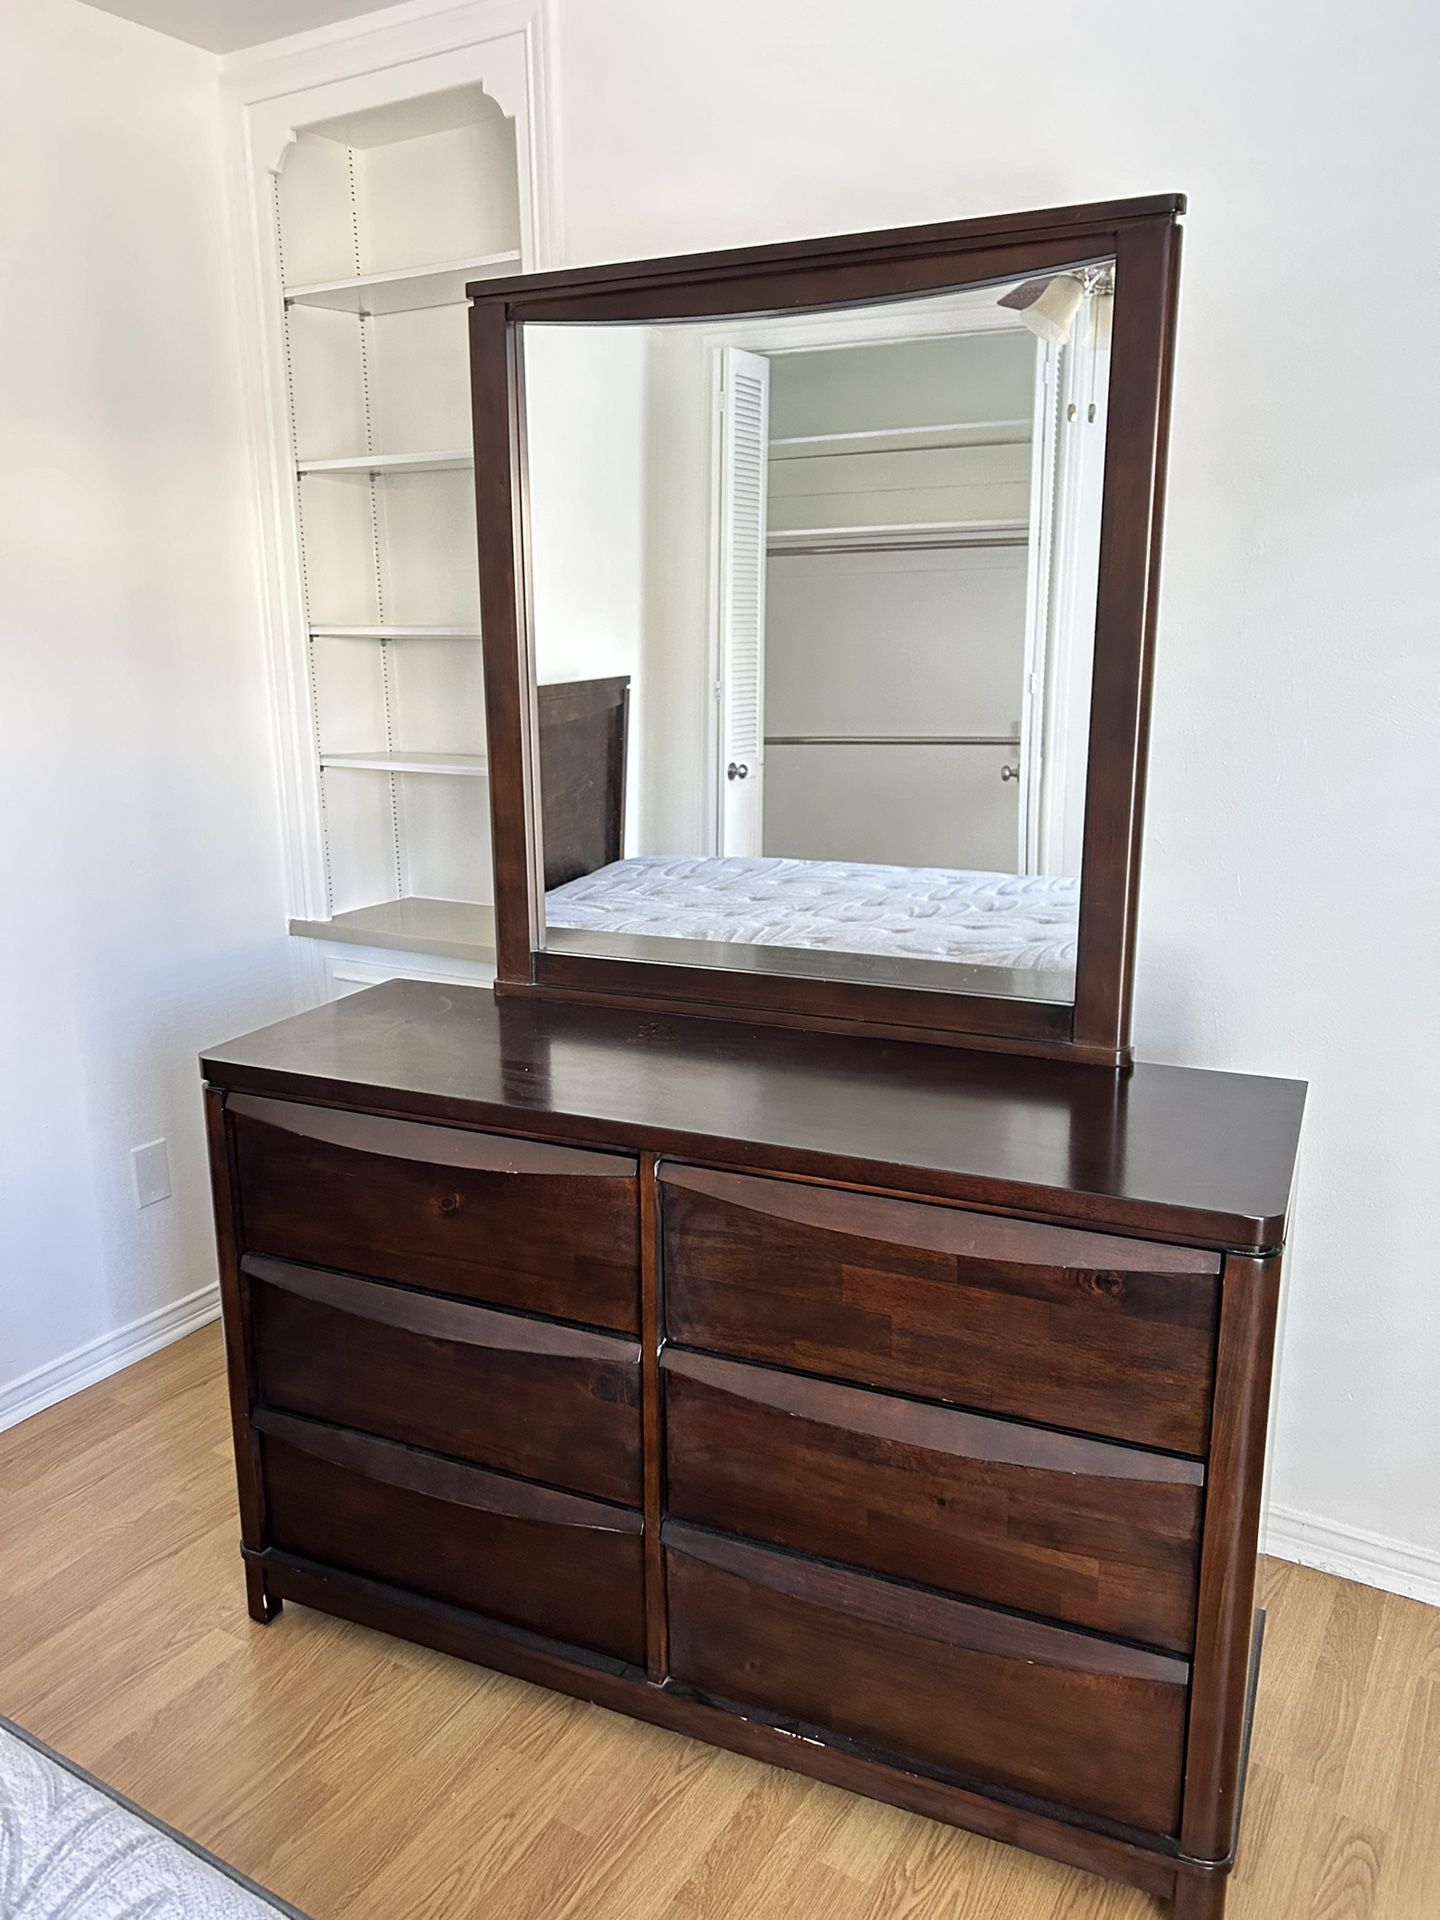 Bedframe, Full-Size With Dresser